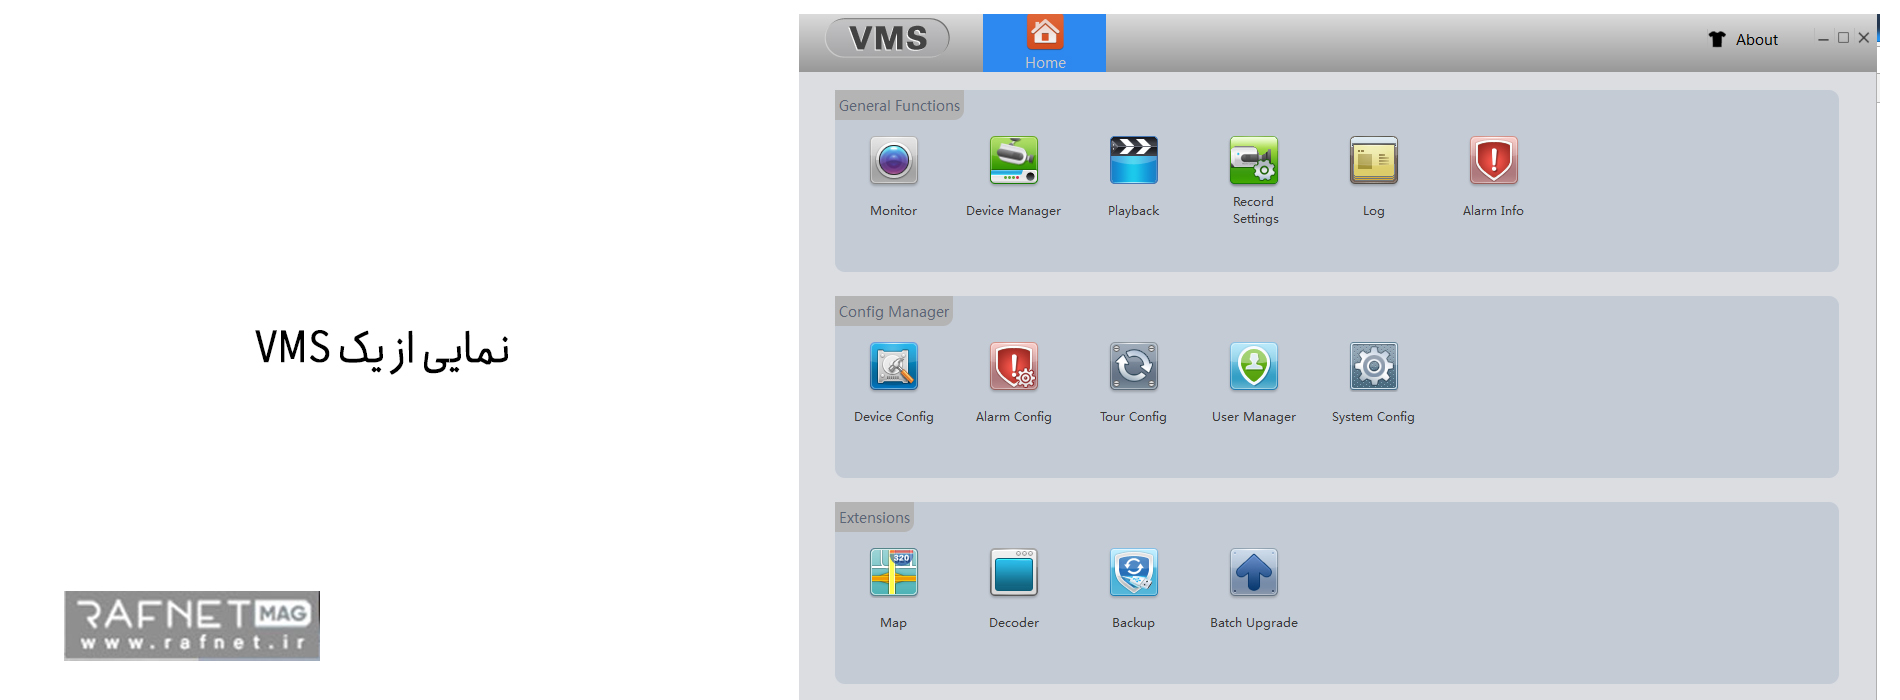 VMS نرم افزار مدیریت تصویر